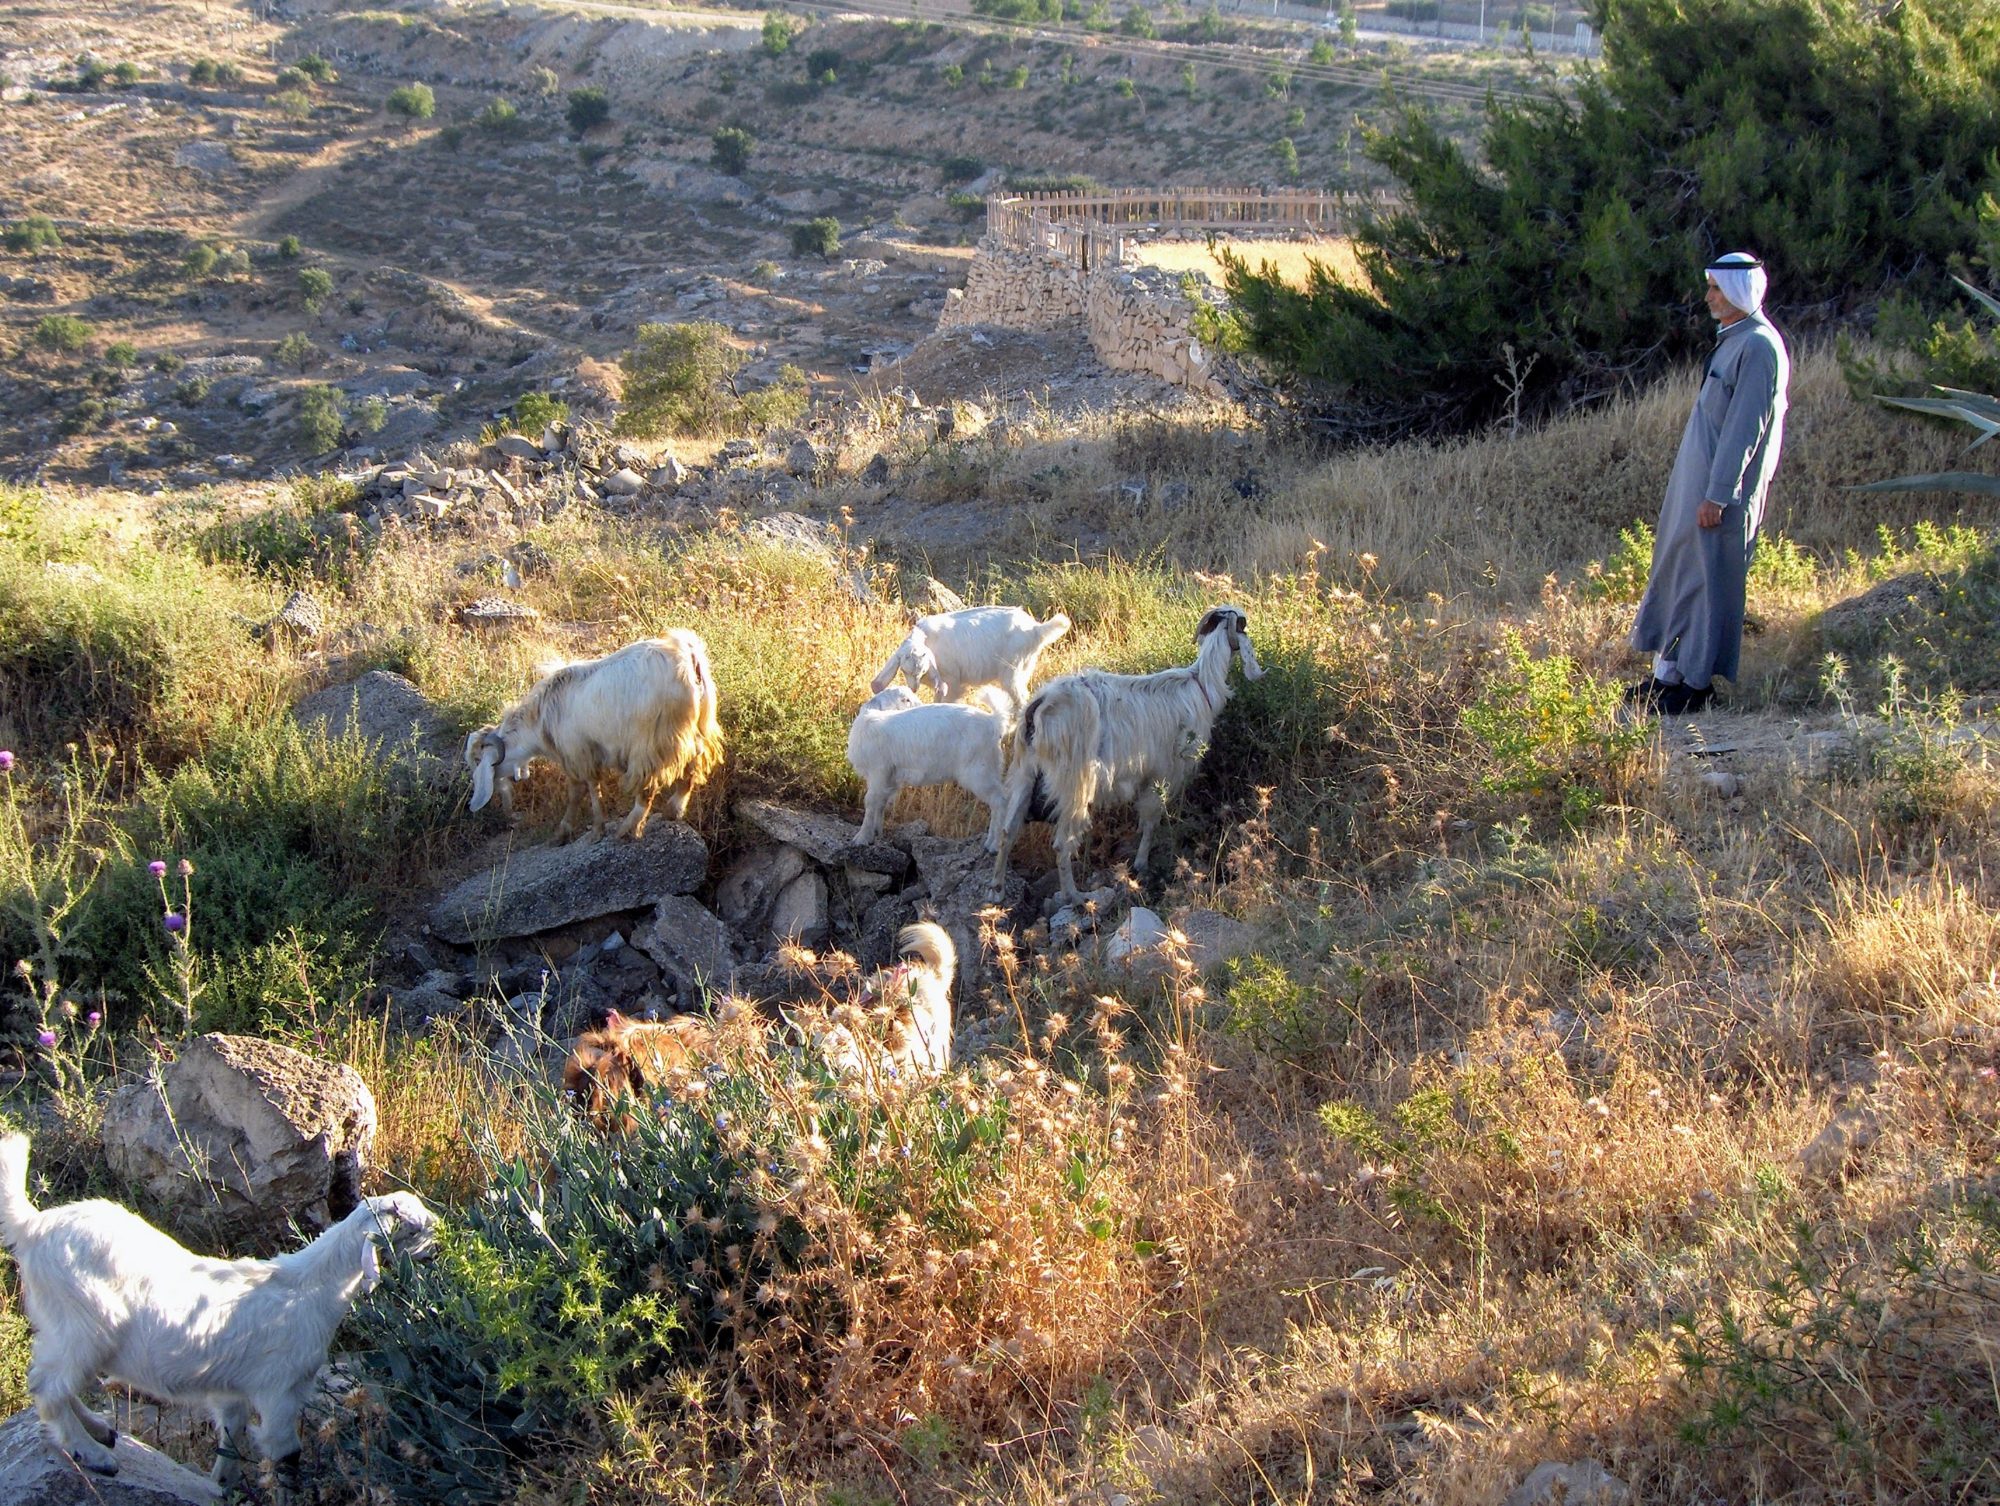 A shepherd tending sheep outside Jerusalem